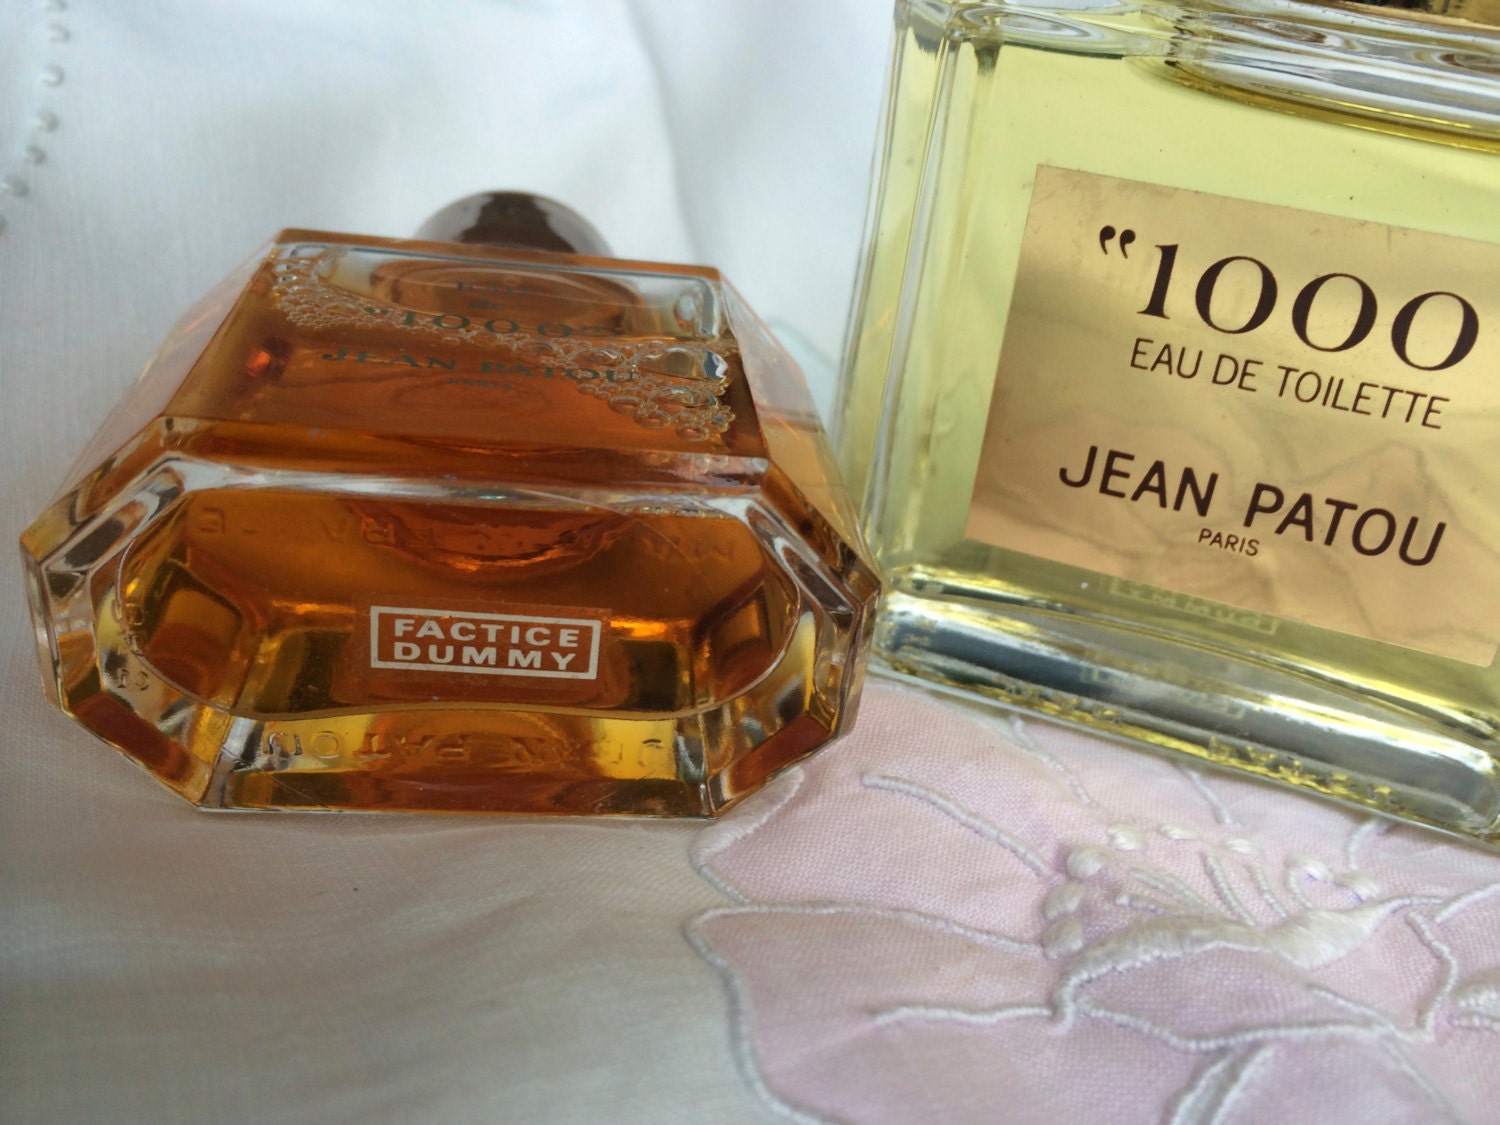 vintage chanel perfume bottle mini